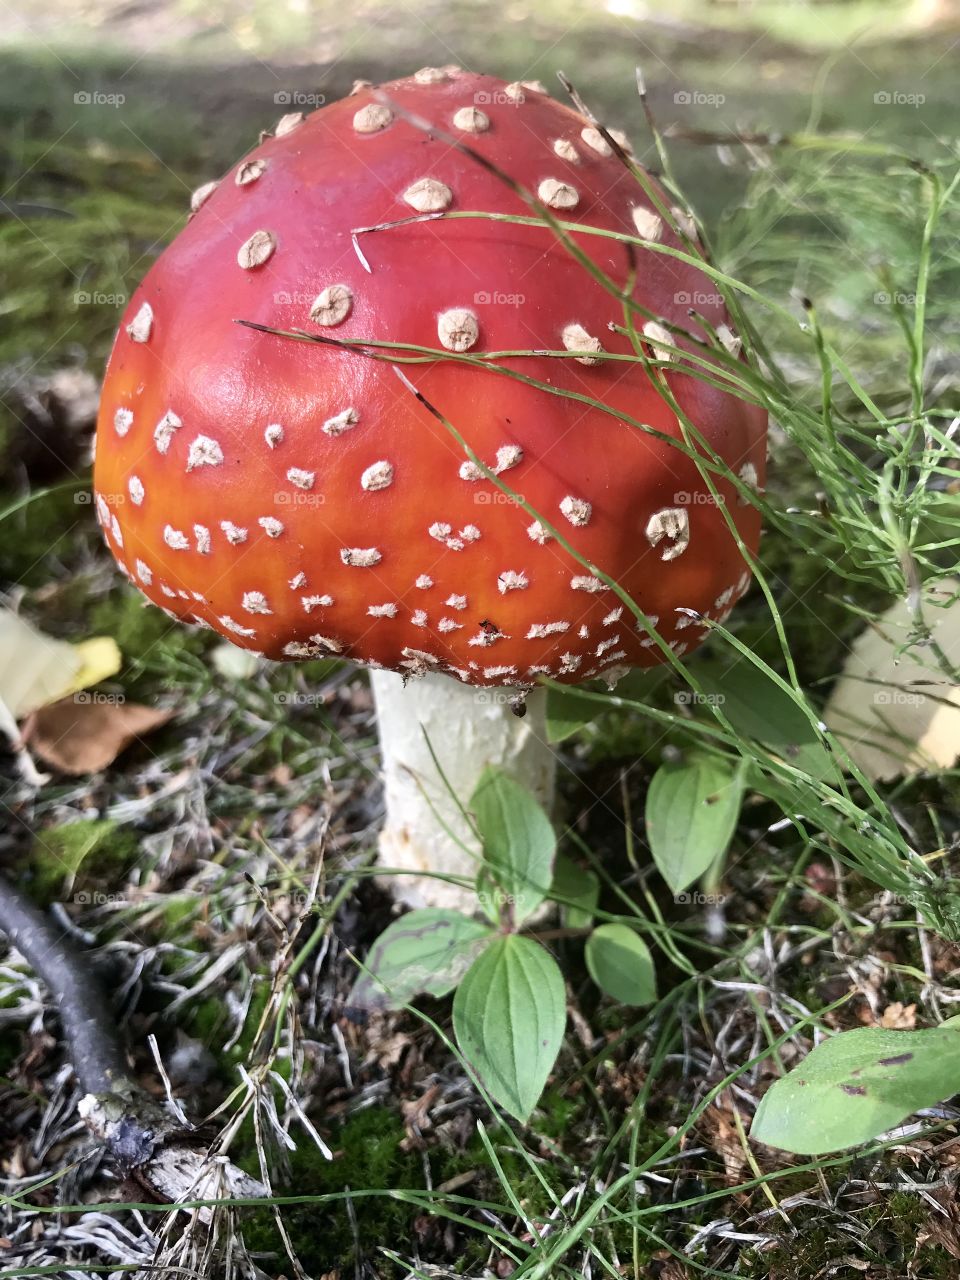 Poisonous mushroom but so beautiful!